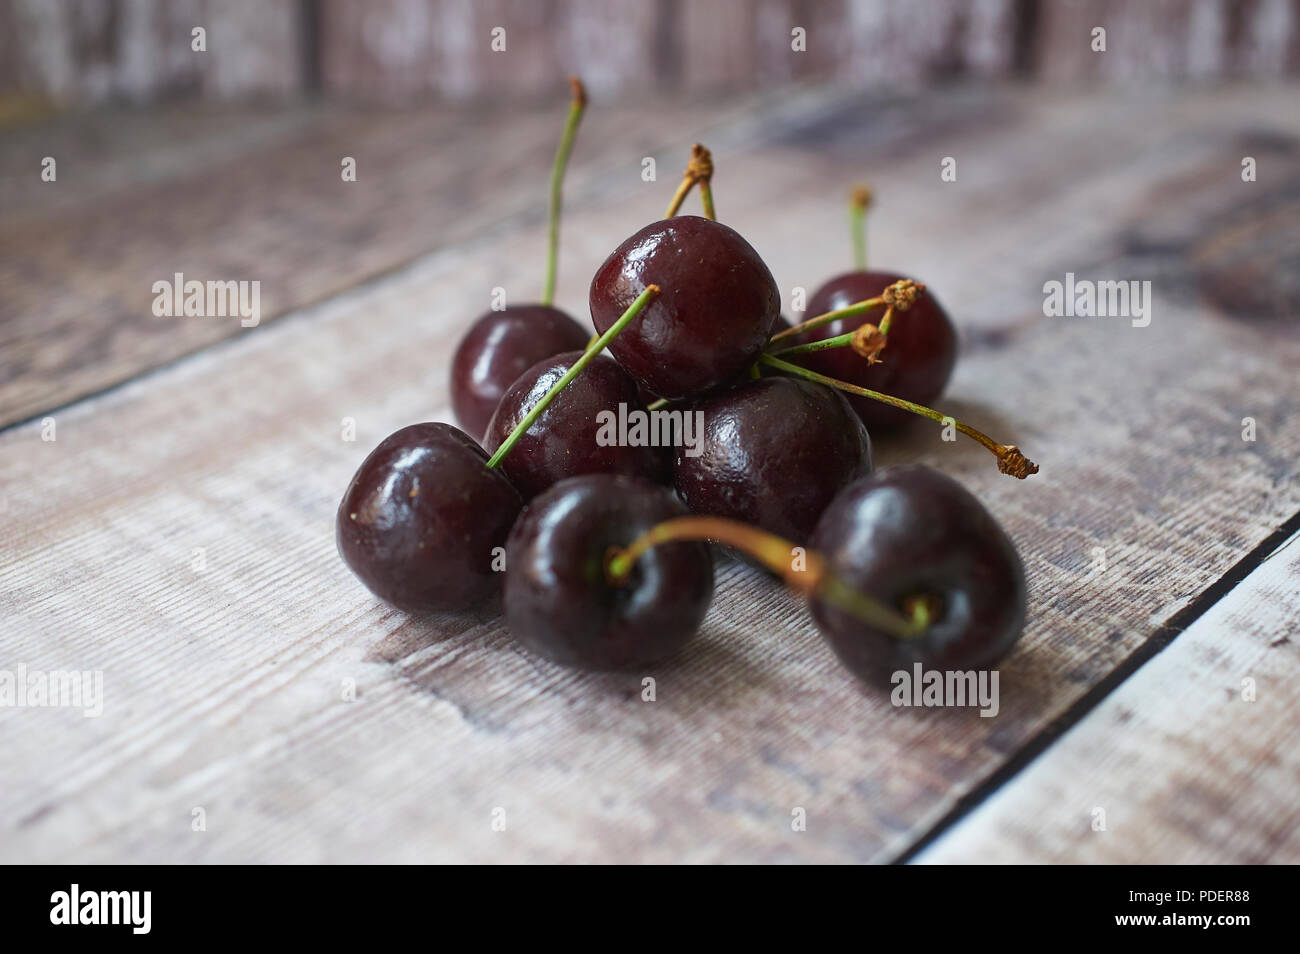 Appetising fresh Morello Cherries on wooden table top Stock Photo